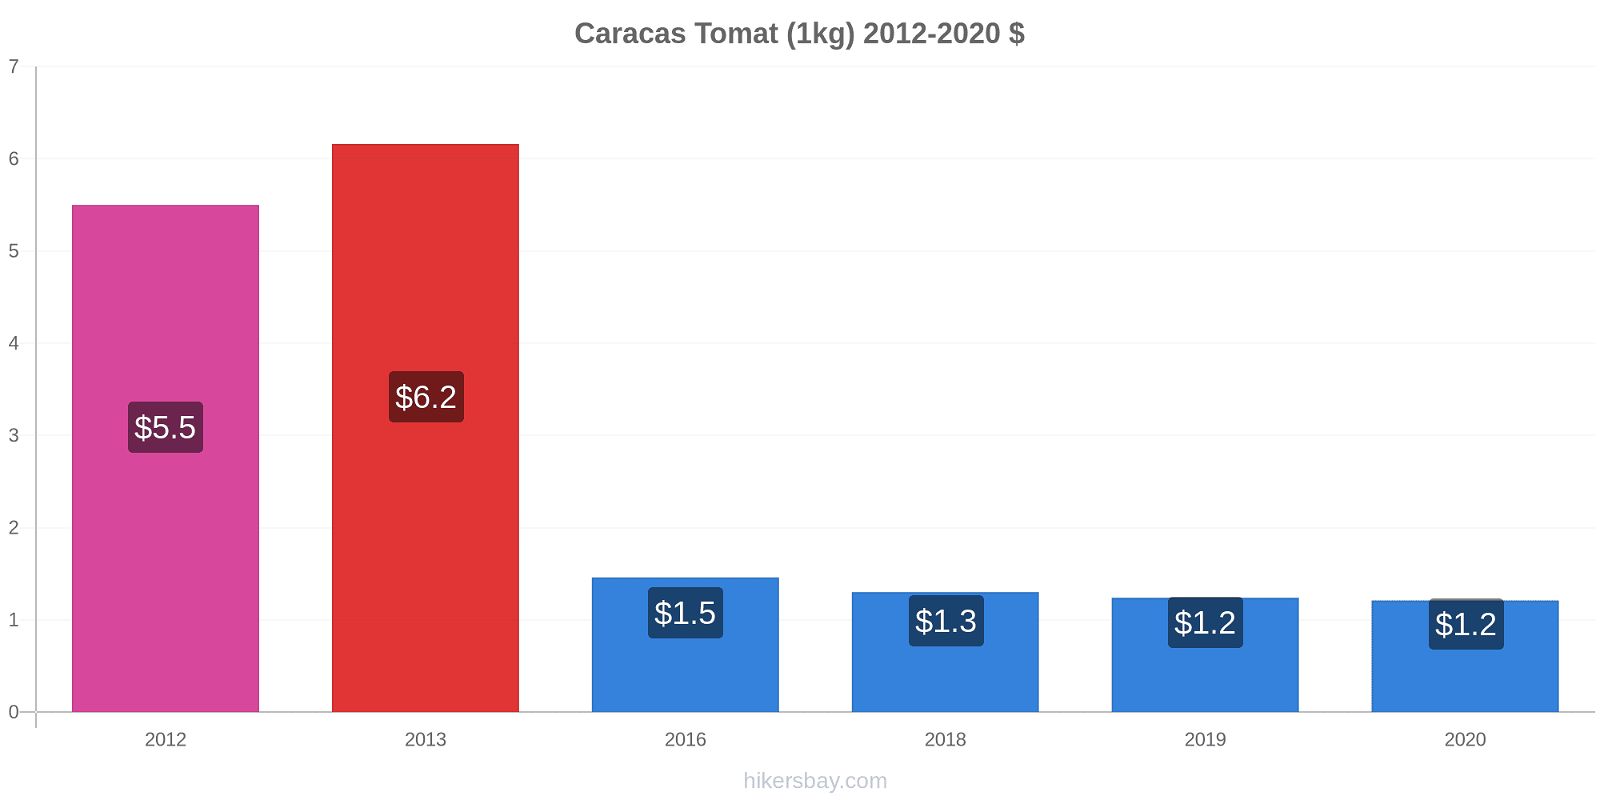 Caracas perubahan harga Tomat (1kg) hikersbay.com